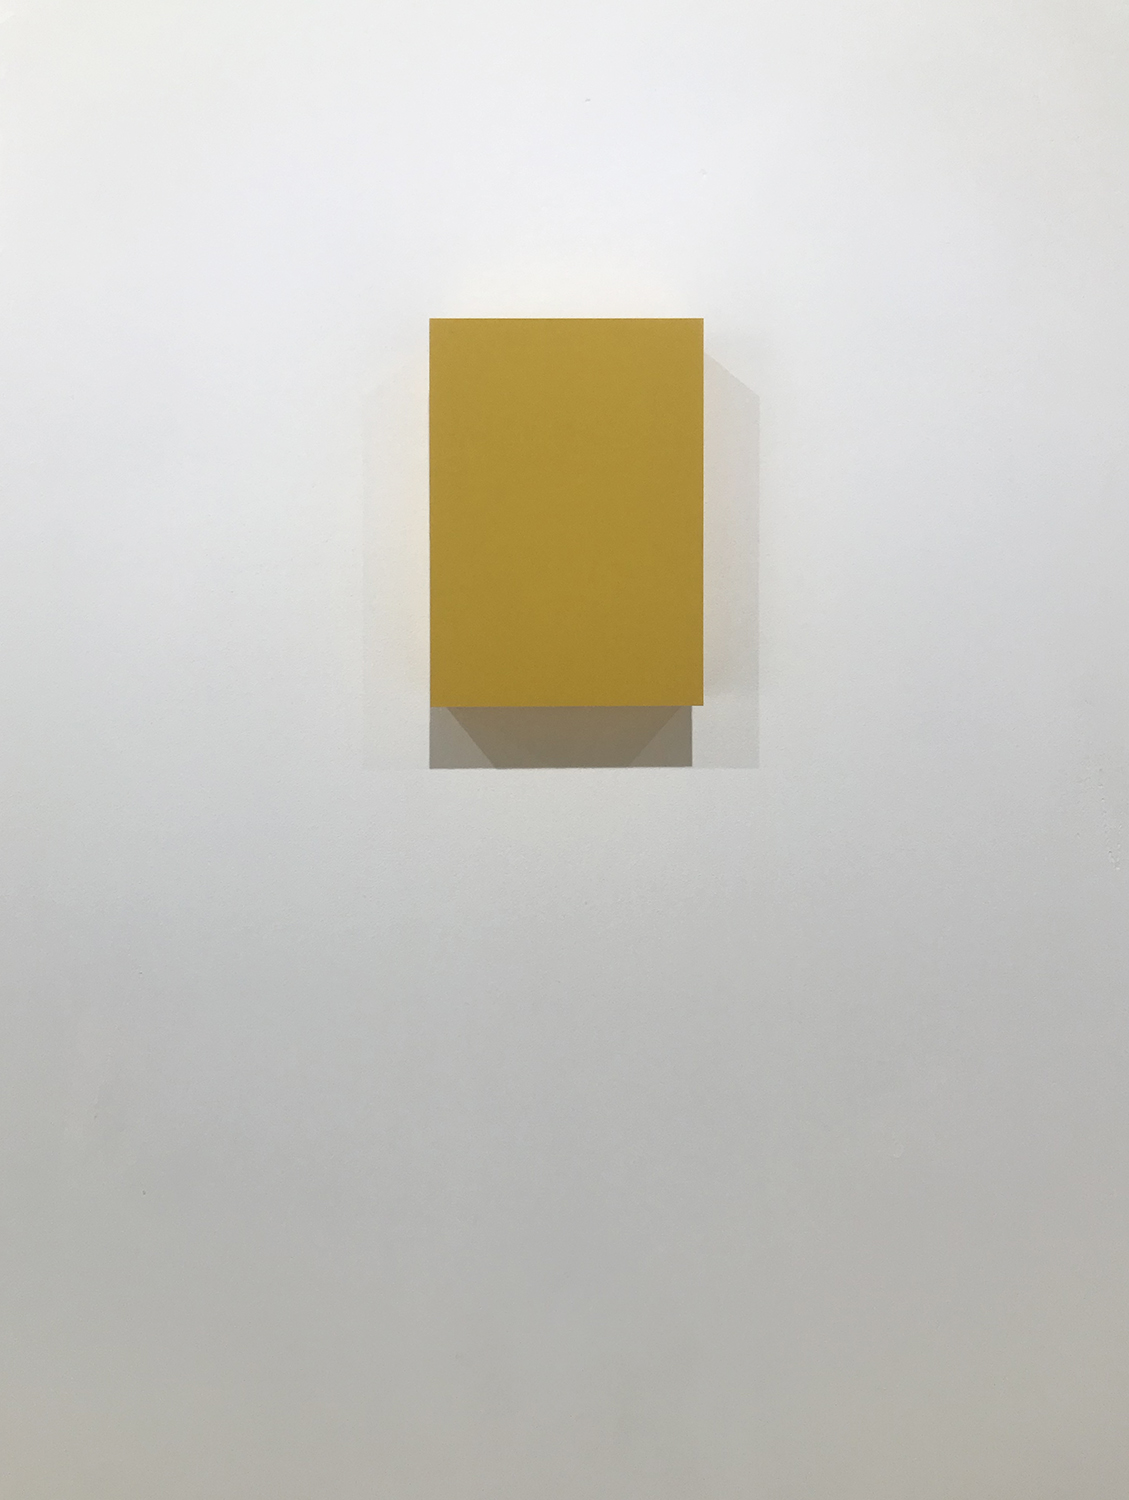 越野潤｜JUN KOSHINO<br>WORK16-8 (yellow), silkscreen paint on perspex, 150 x 100 x 50 mm, 2016